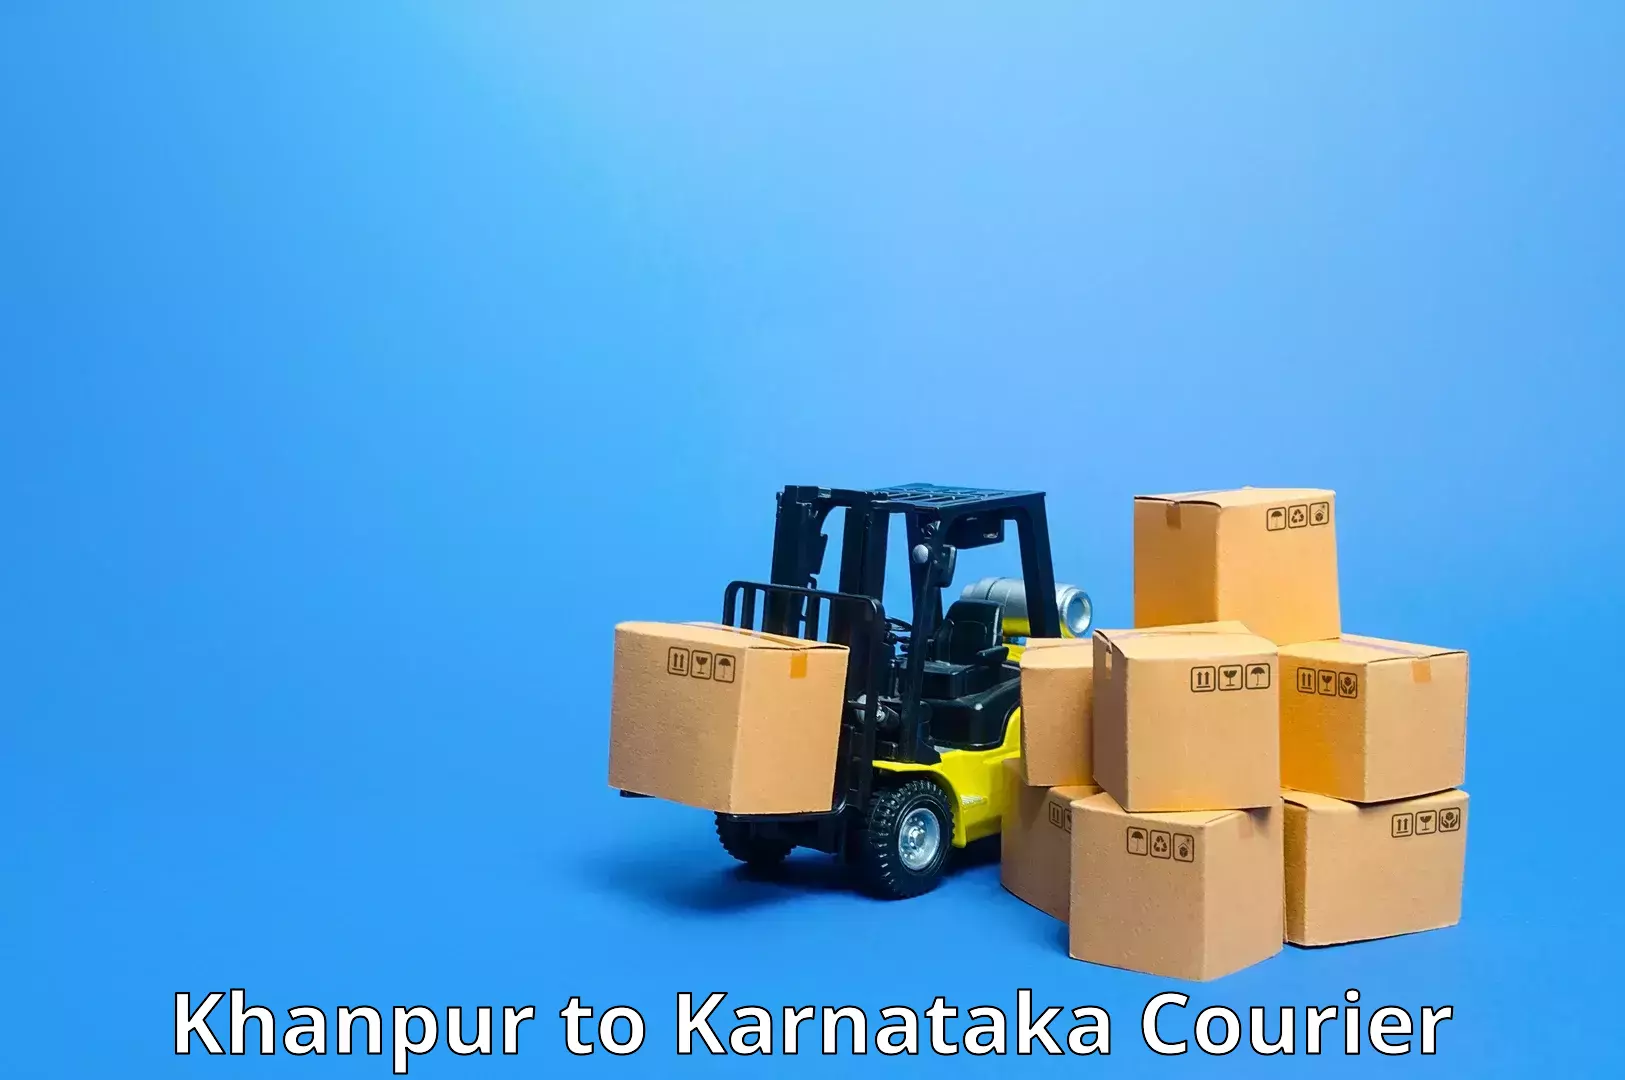 Tracking updates in Khanpur to Karnataka